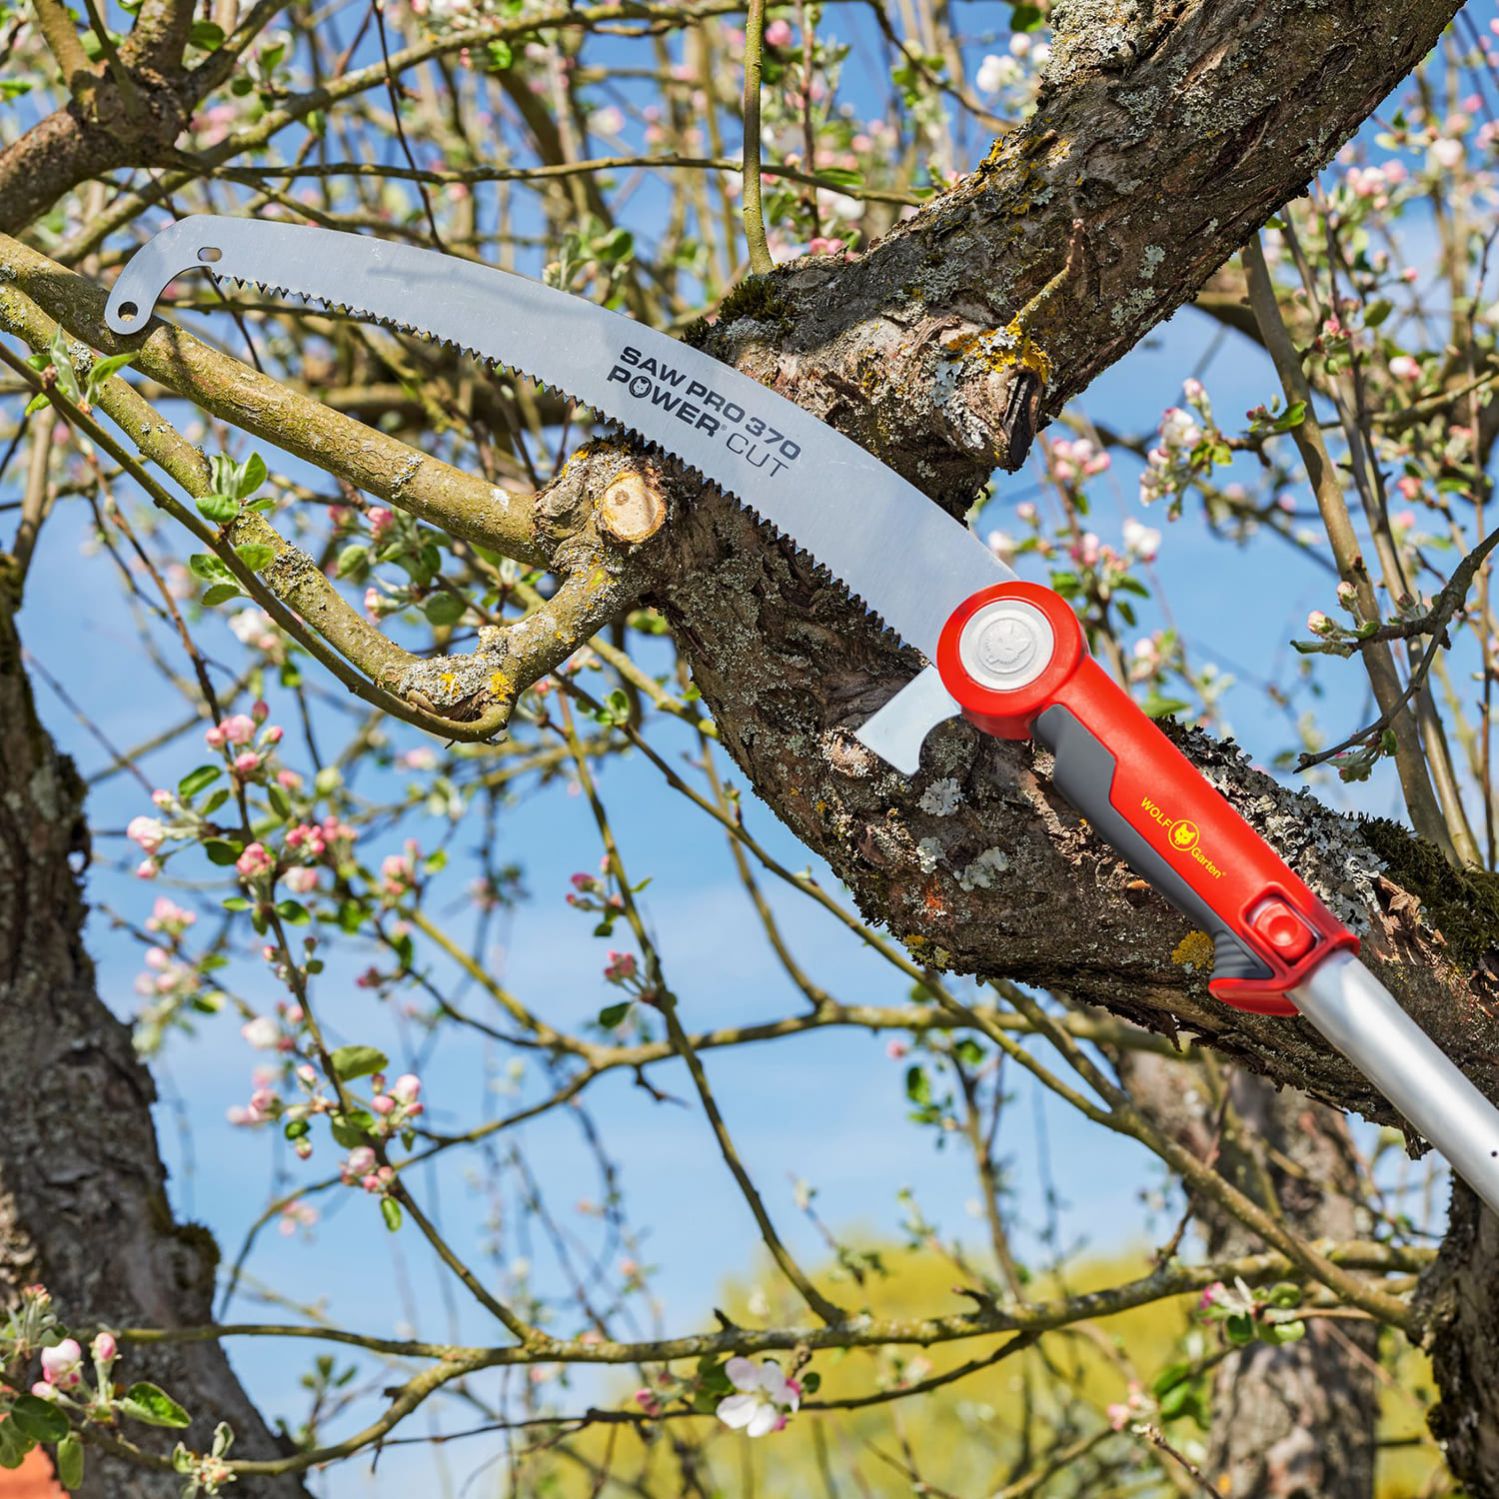 Wolf Garten Pro Pruning Saw (Power Cut Saw Pro 370)